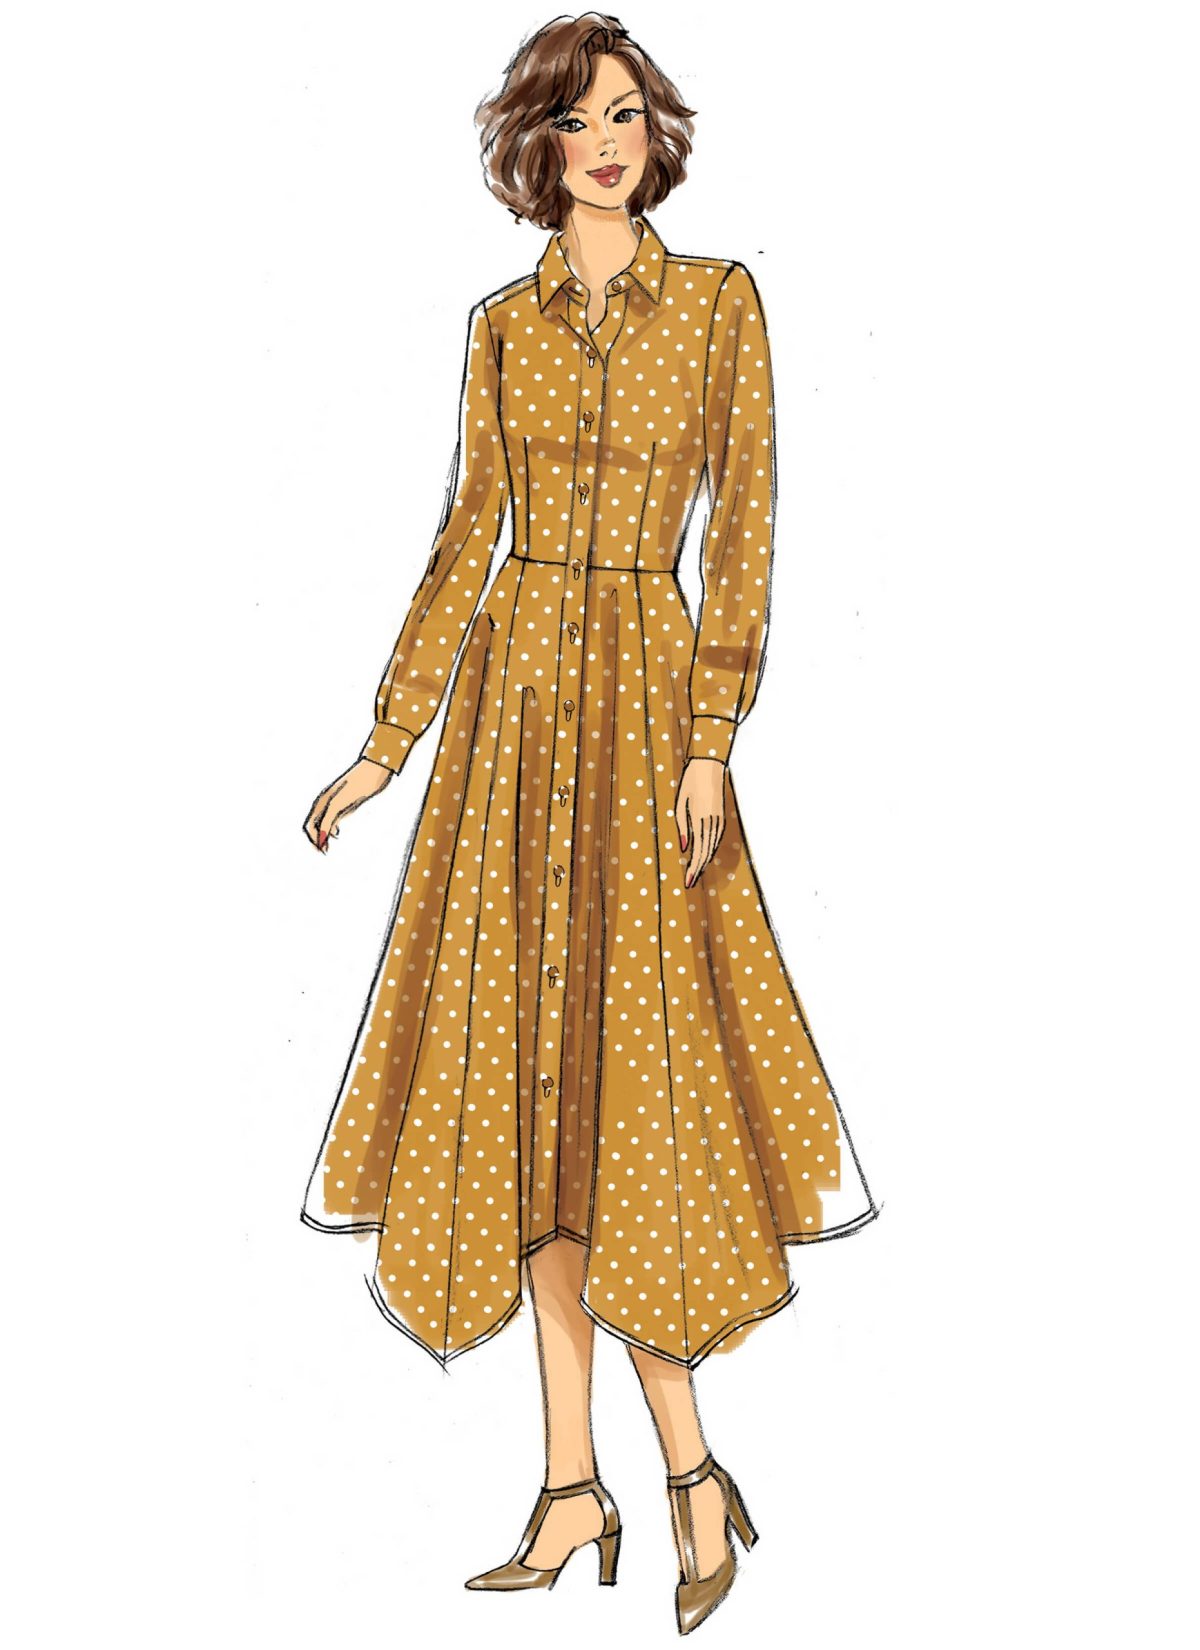 Butterick Sewing Pattern B6702 Misses' Dress